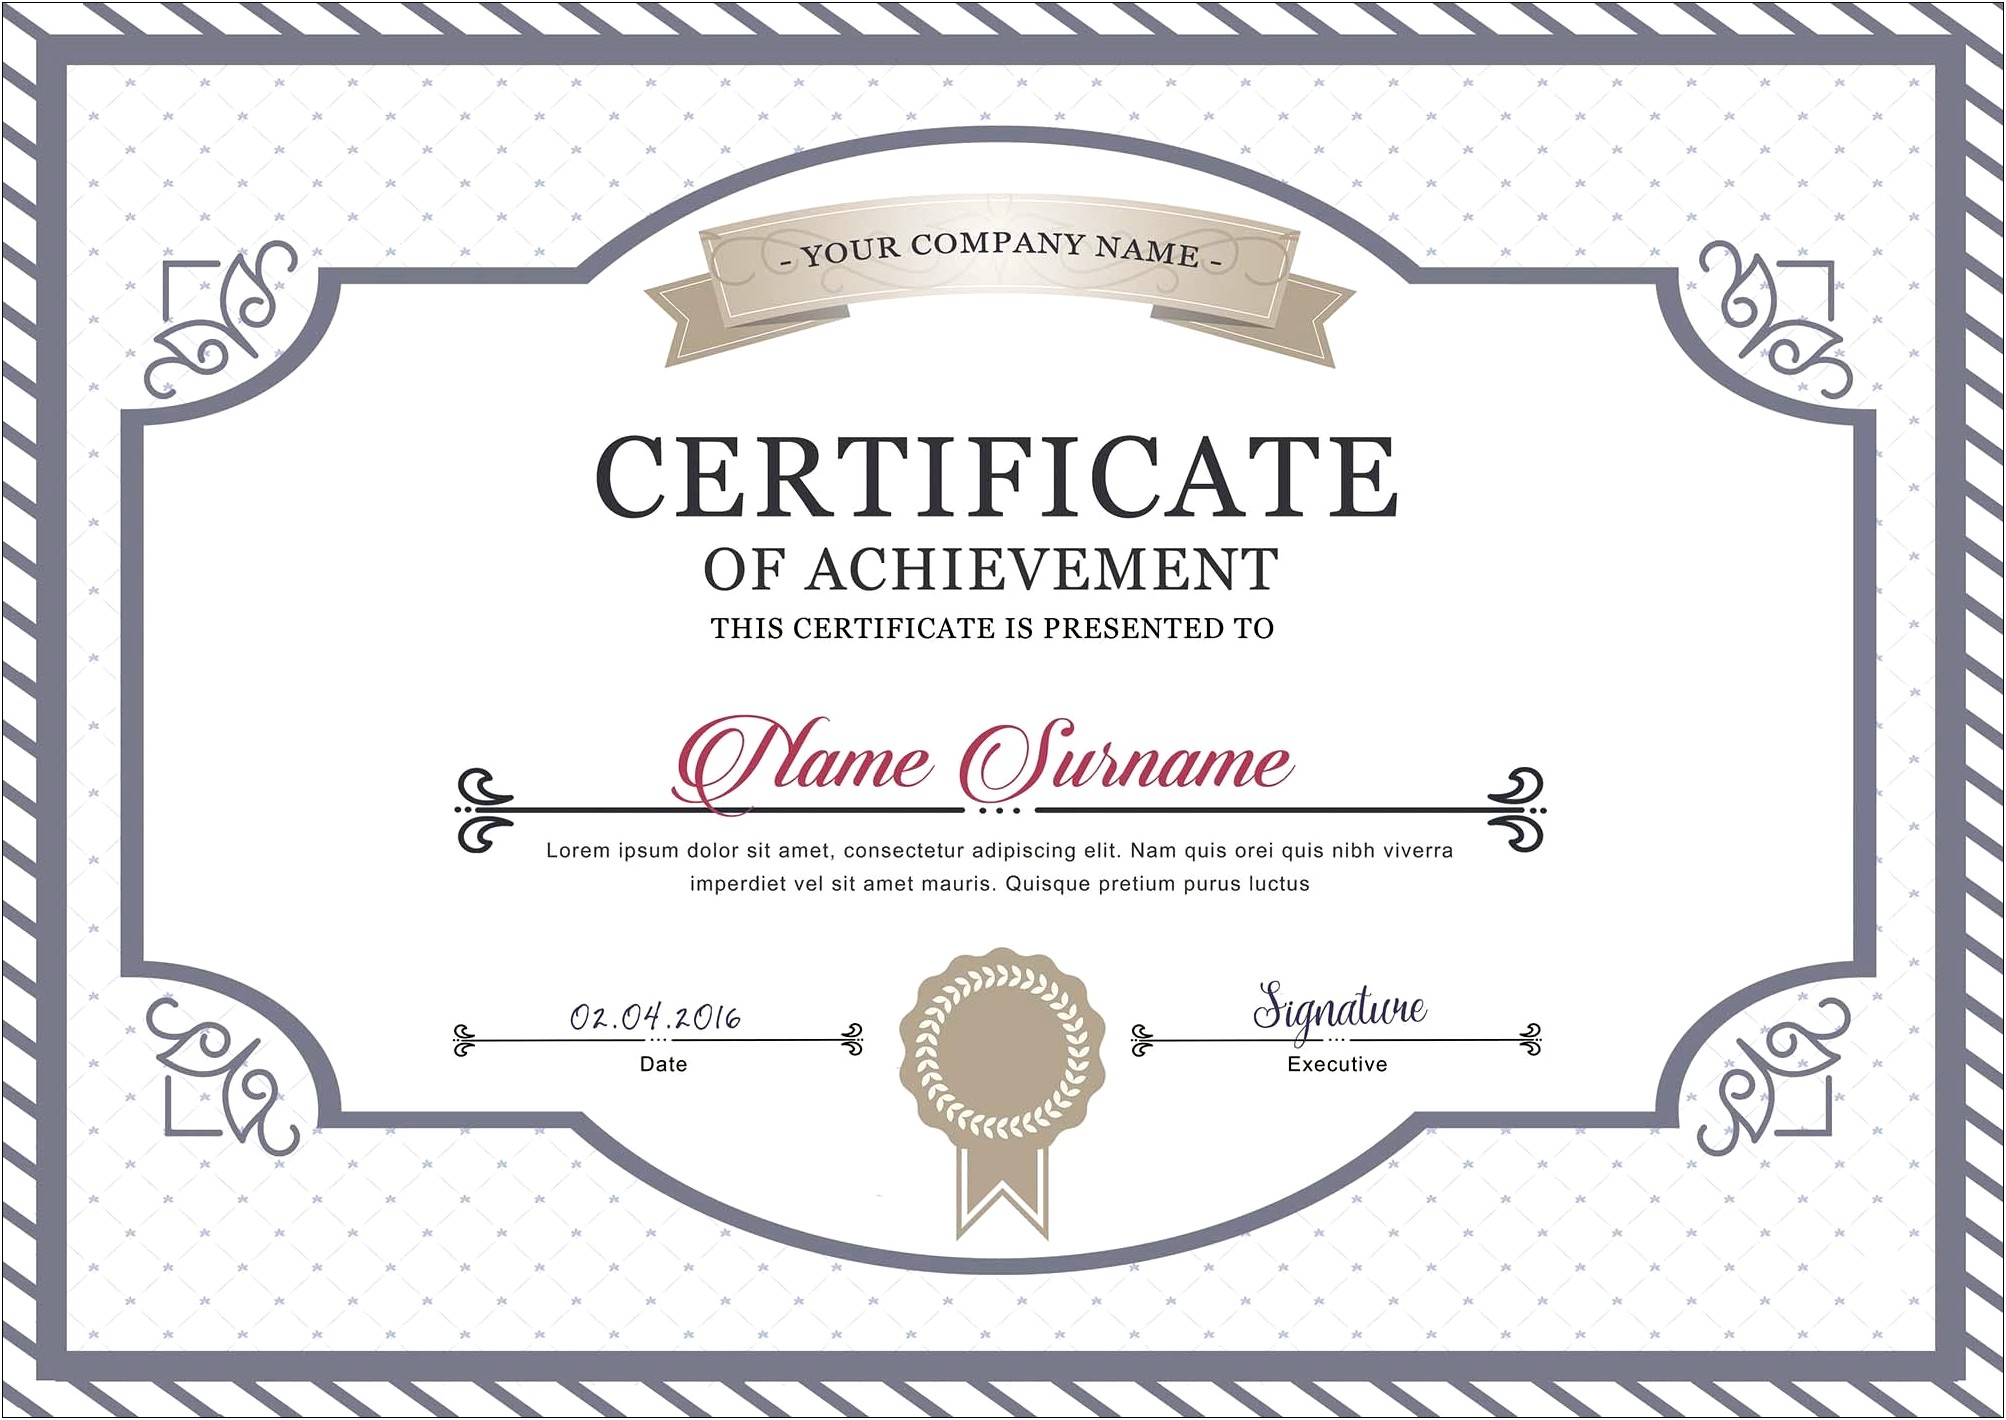 Modern Certificate Design Template Free Download